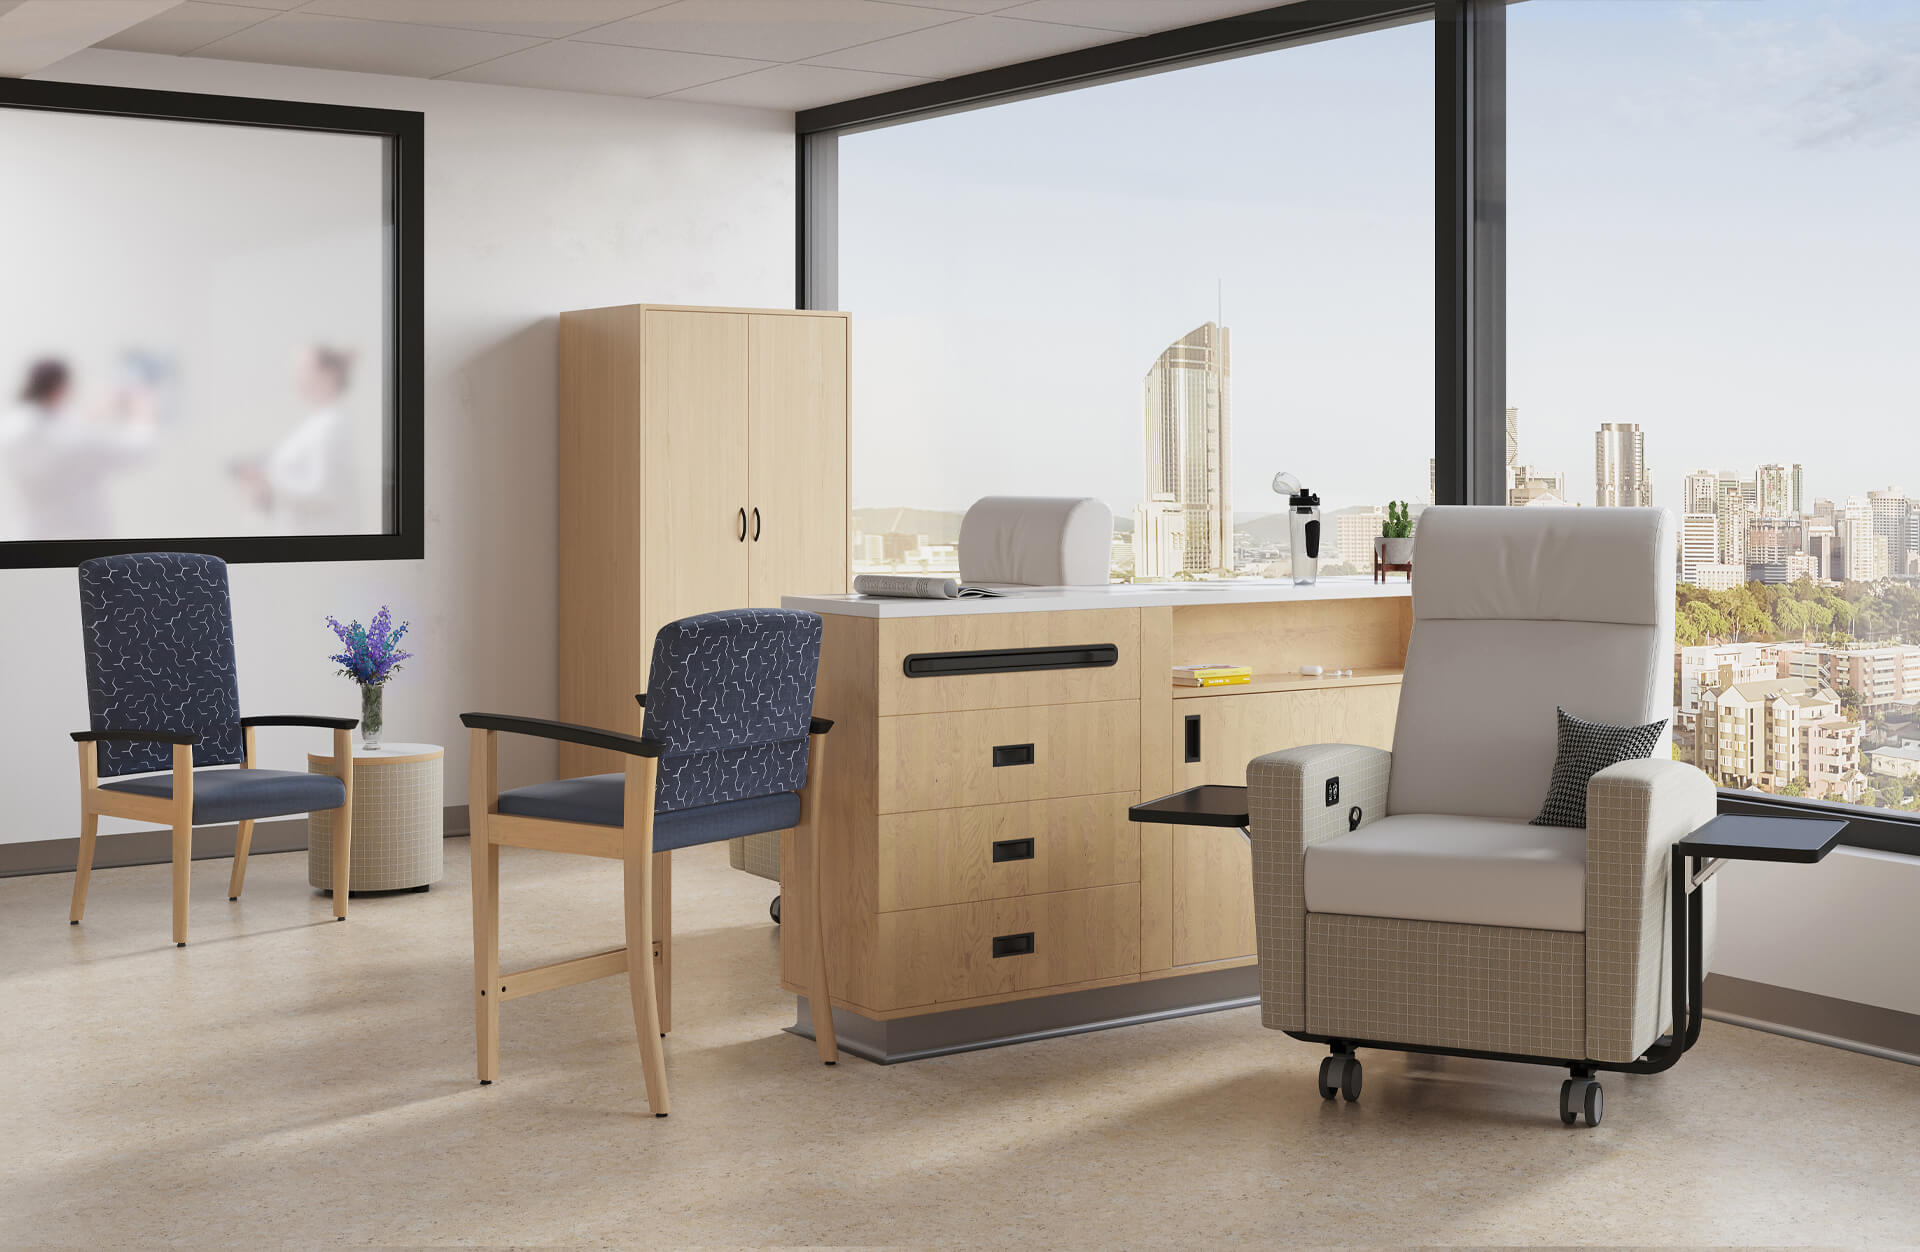 Hospital Room Furniture Lifestyle 3D Rendering